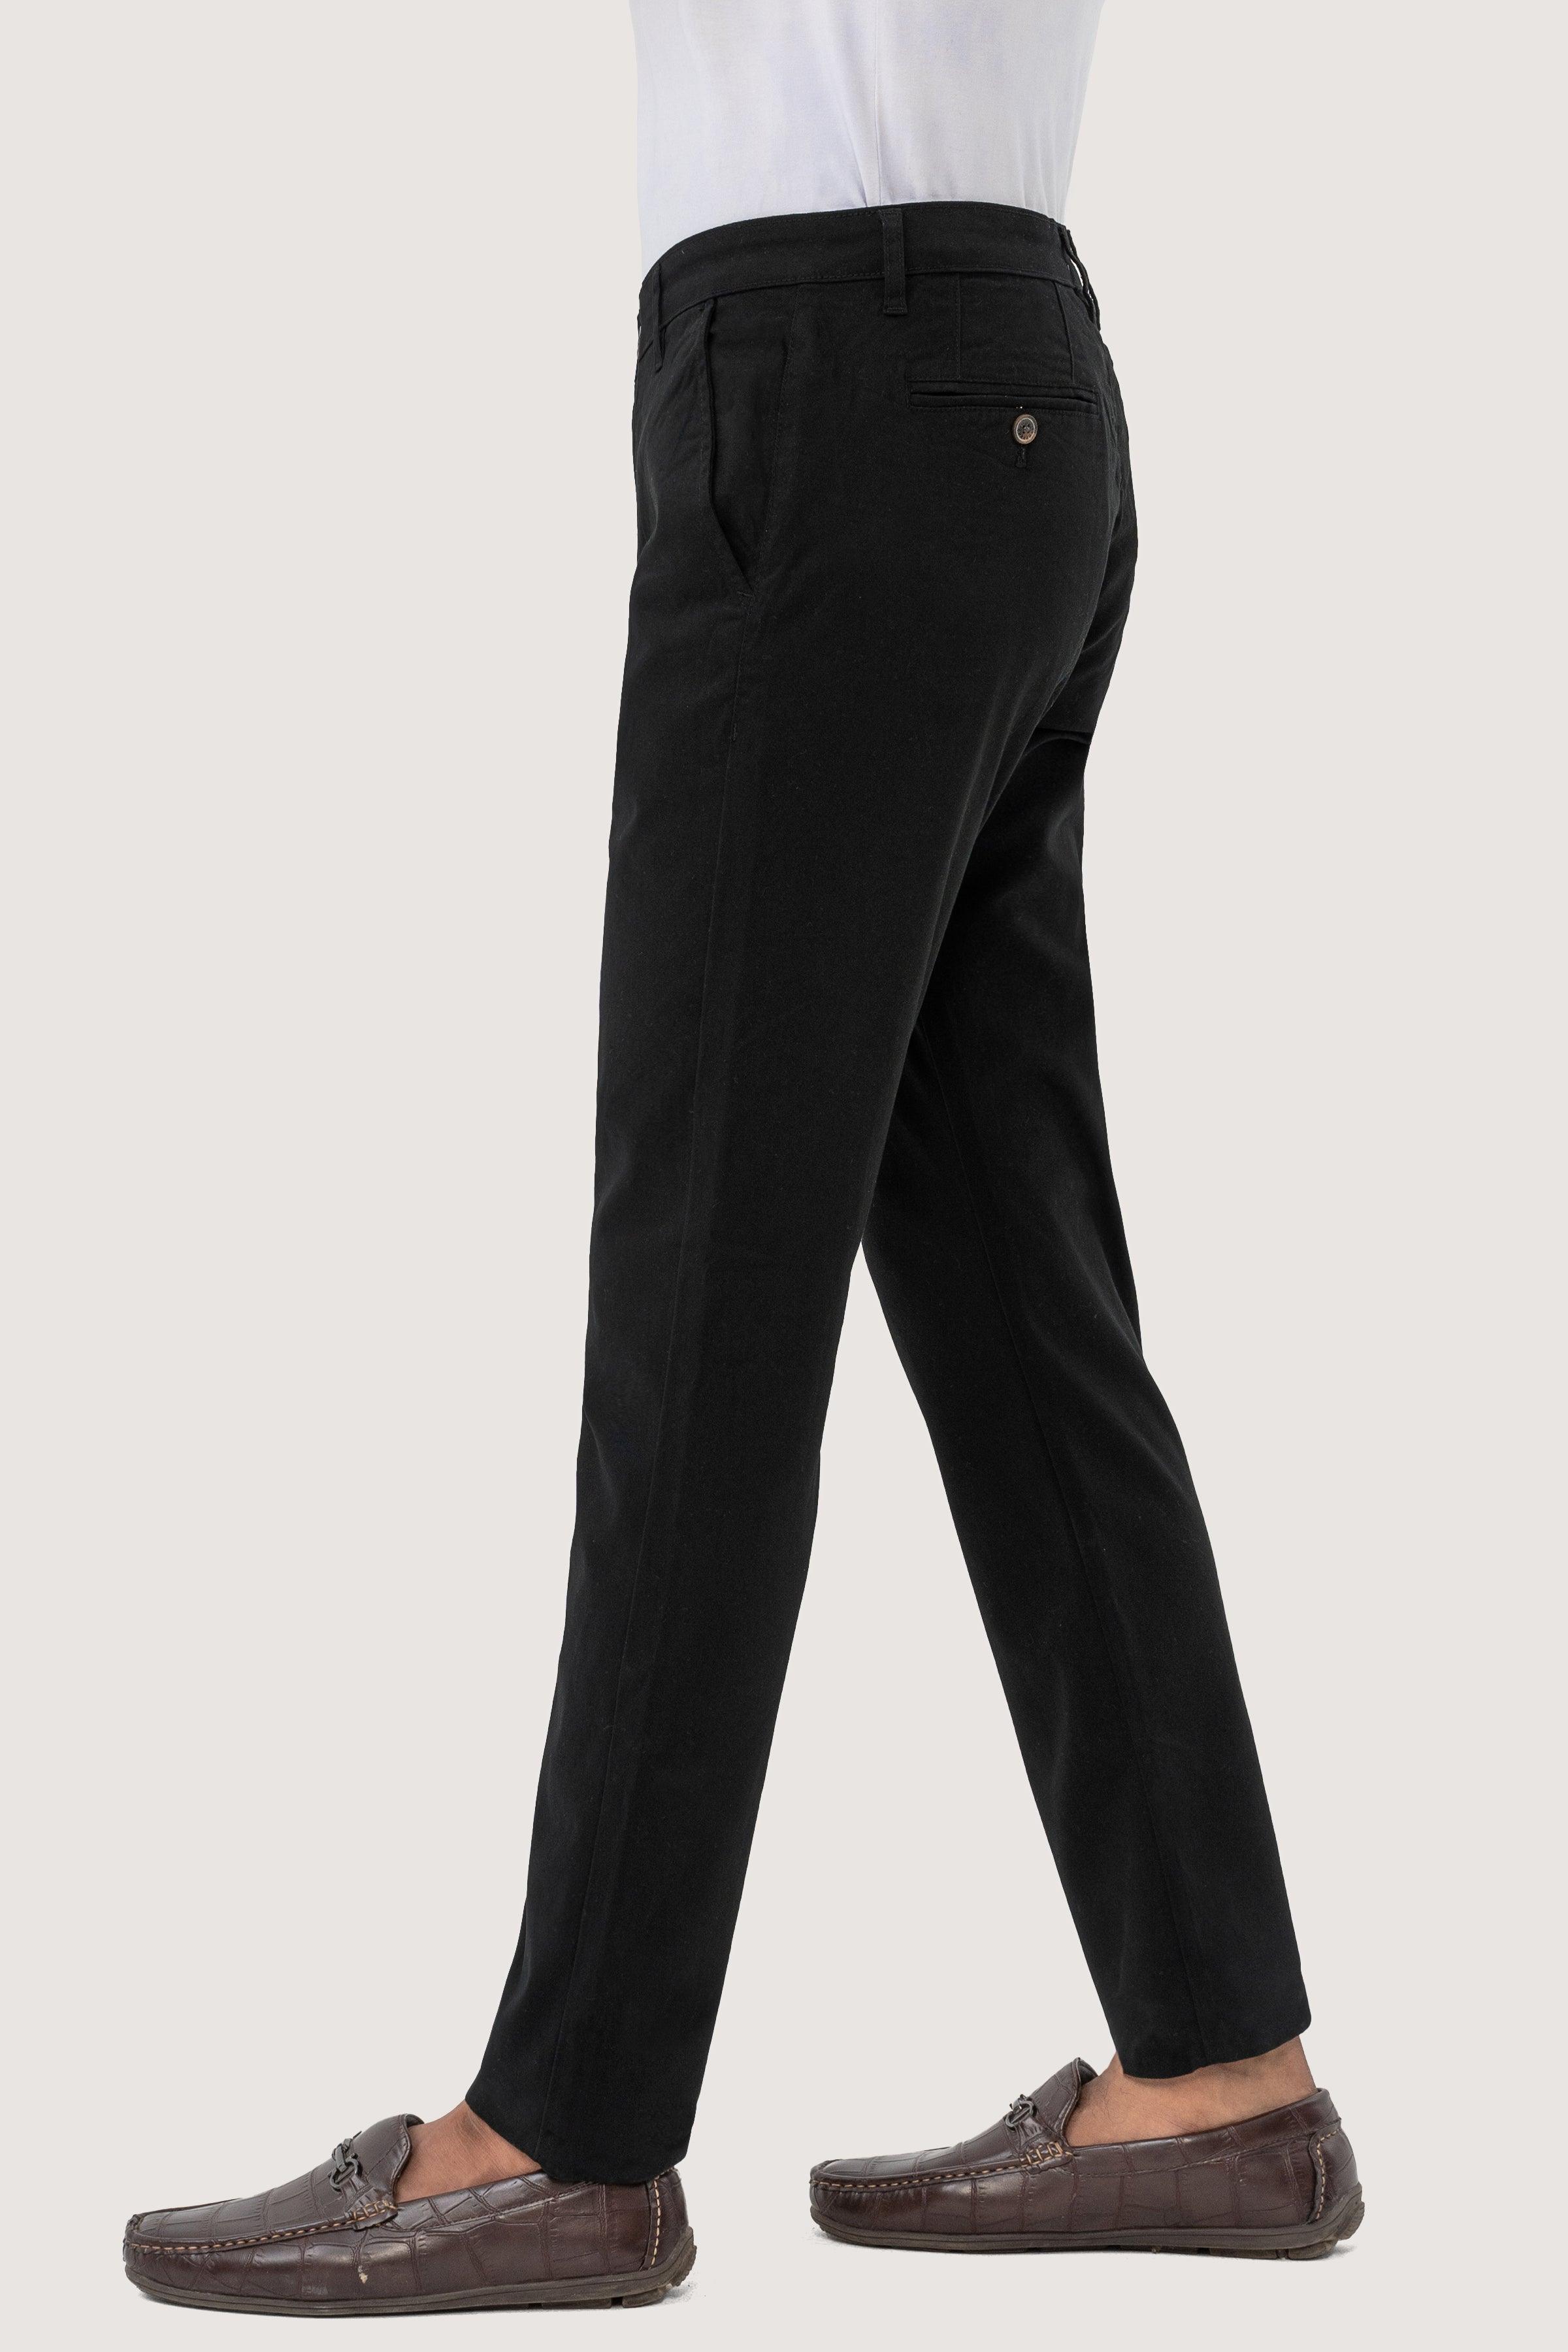 CROSS POCKET TWILL SLIMFIT PANT BLACK at Charcoal Clothing